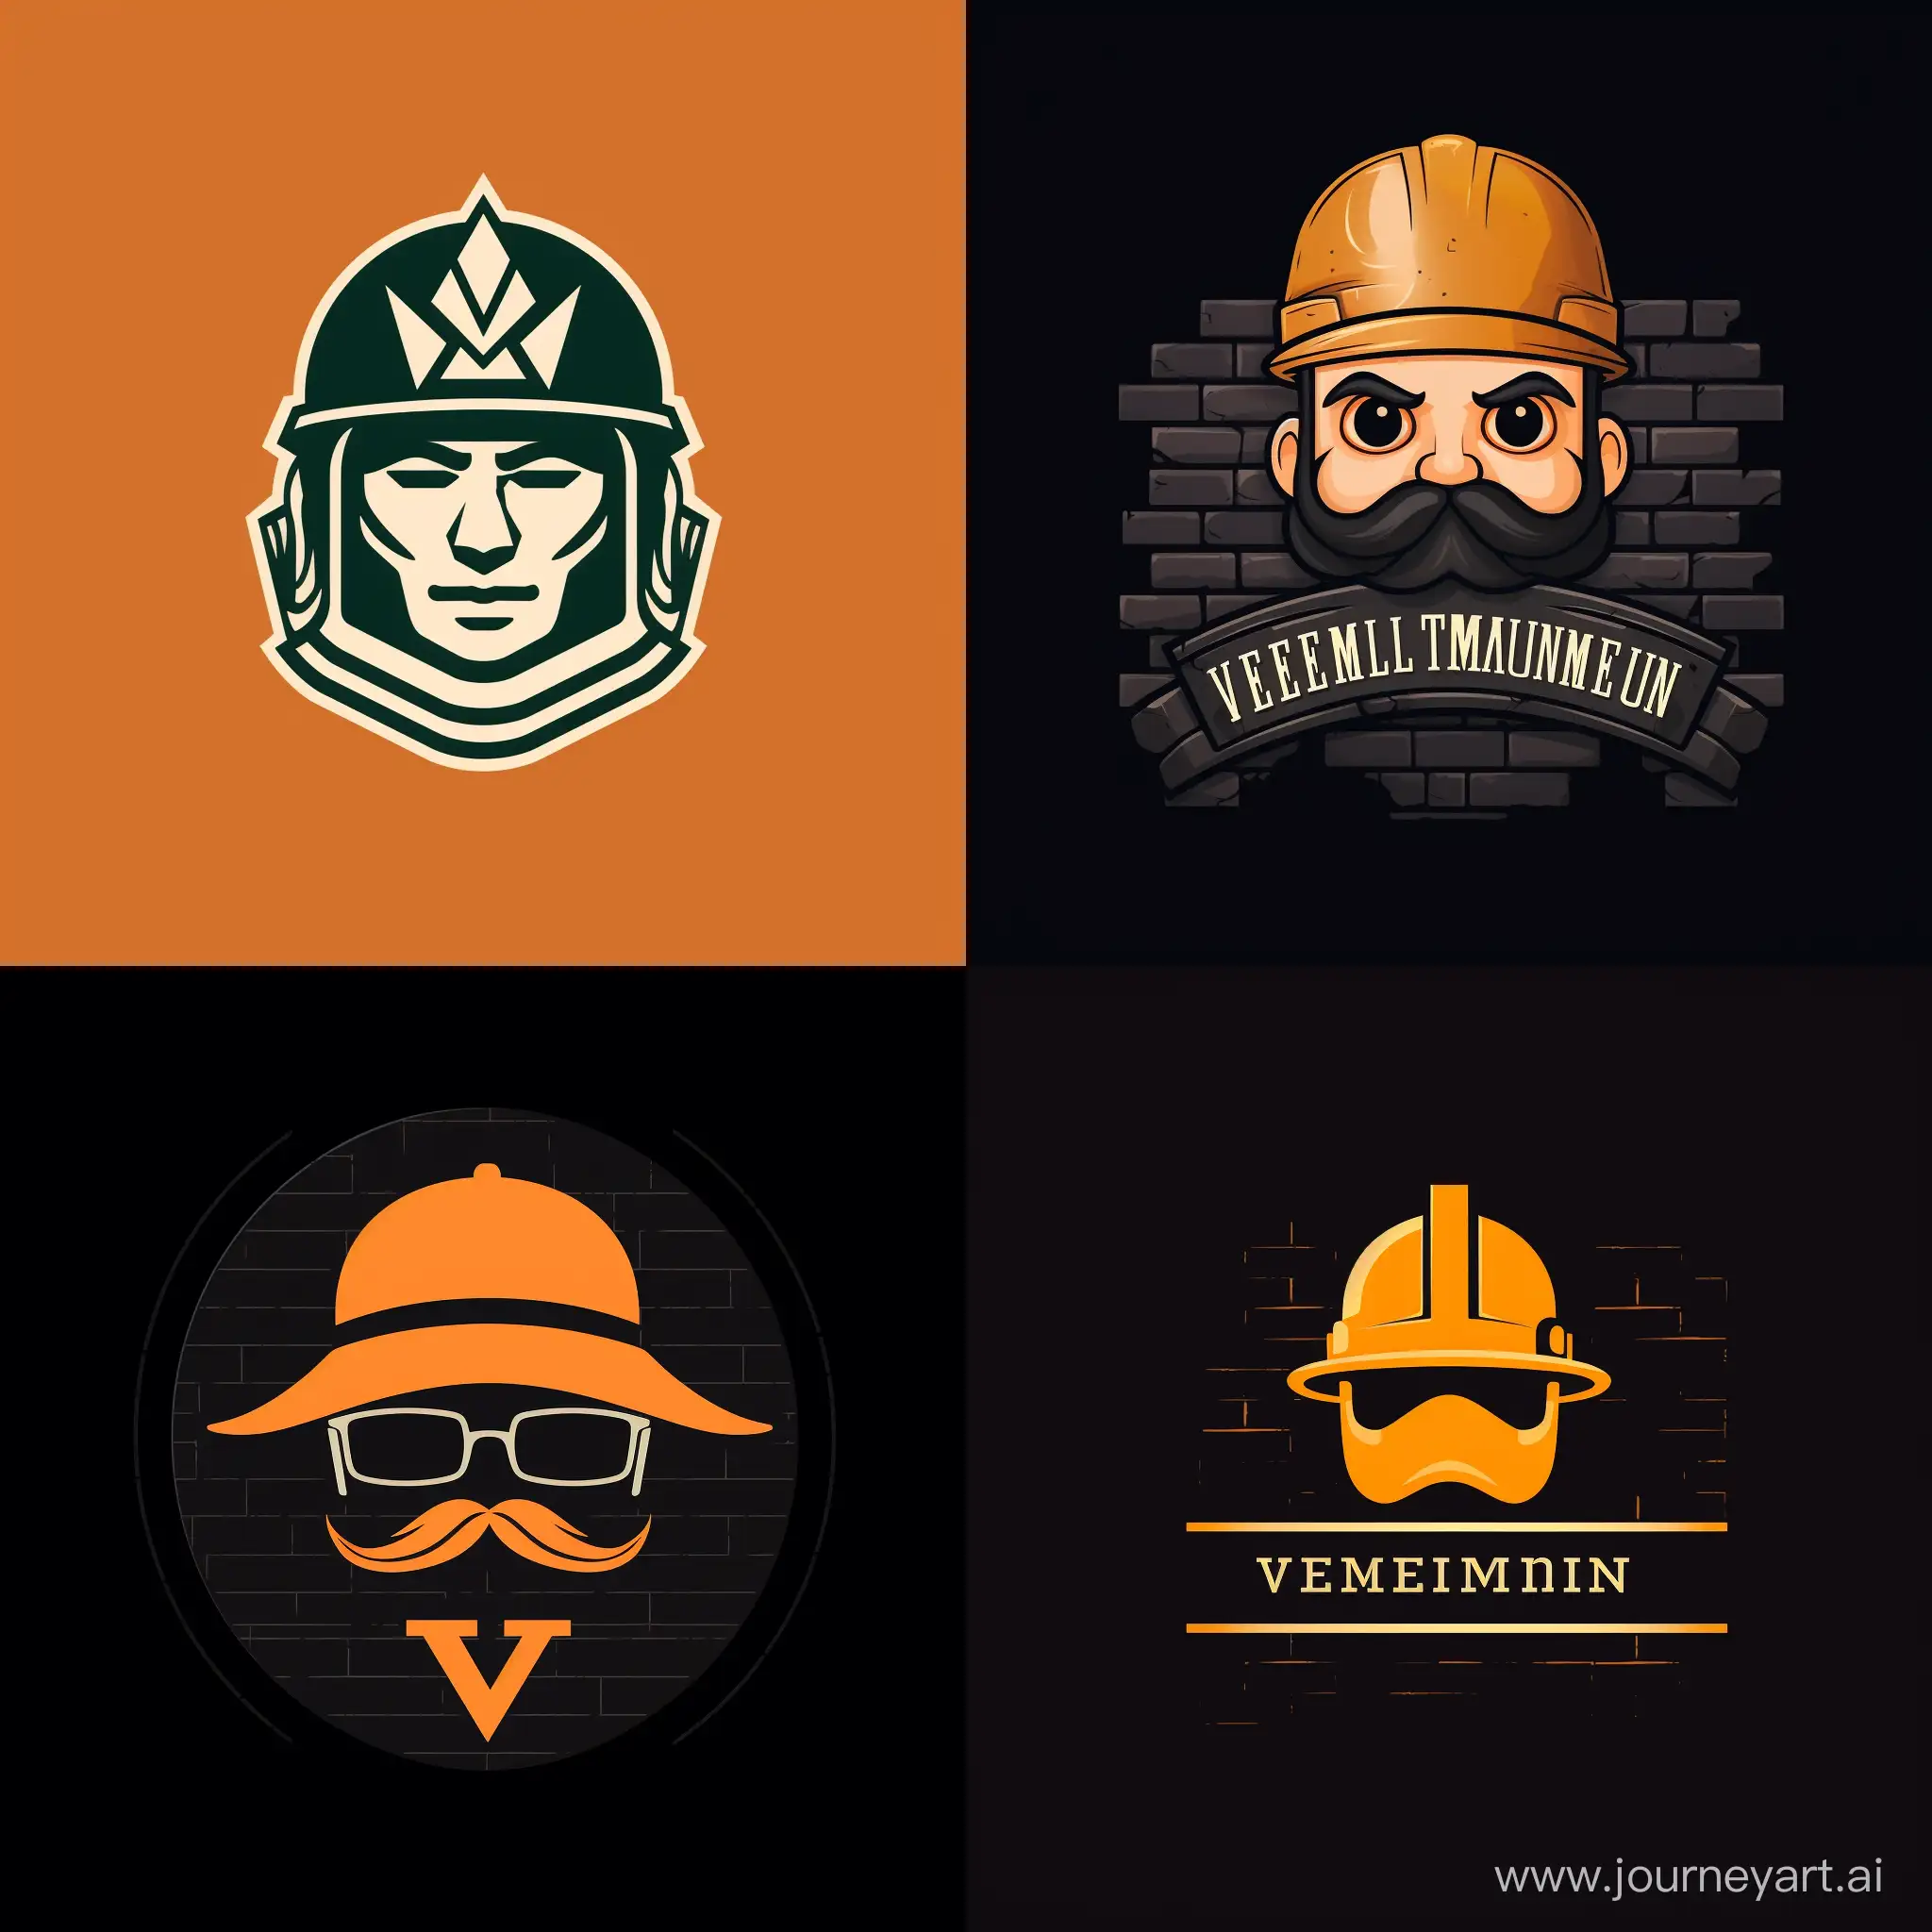 Vermeulen-and-Friends-Construction-Company-Logo-with-Bricks-and-Helmet